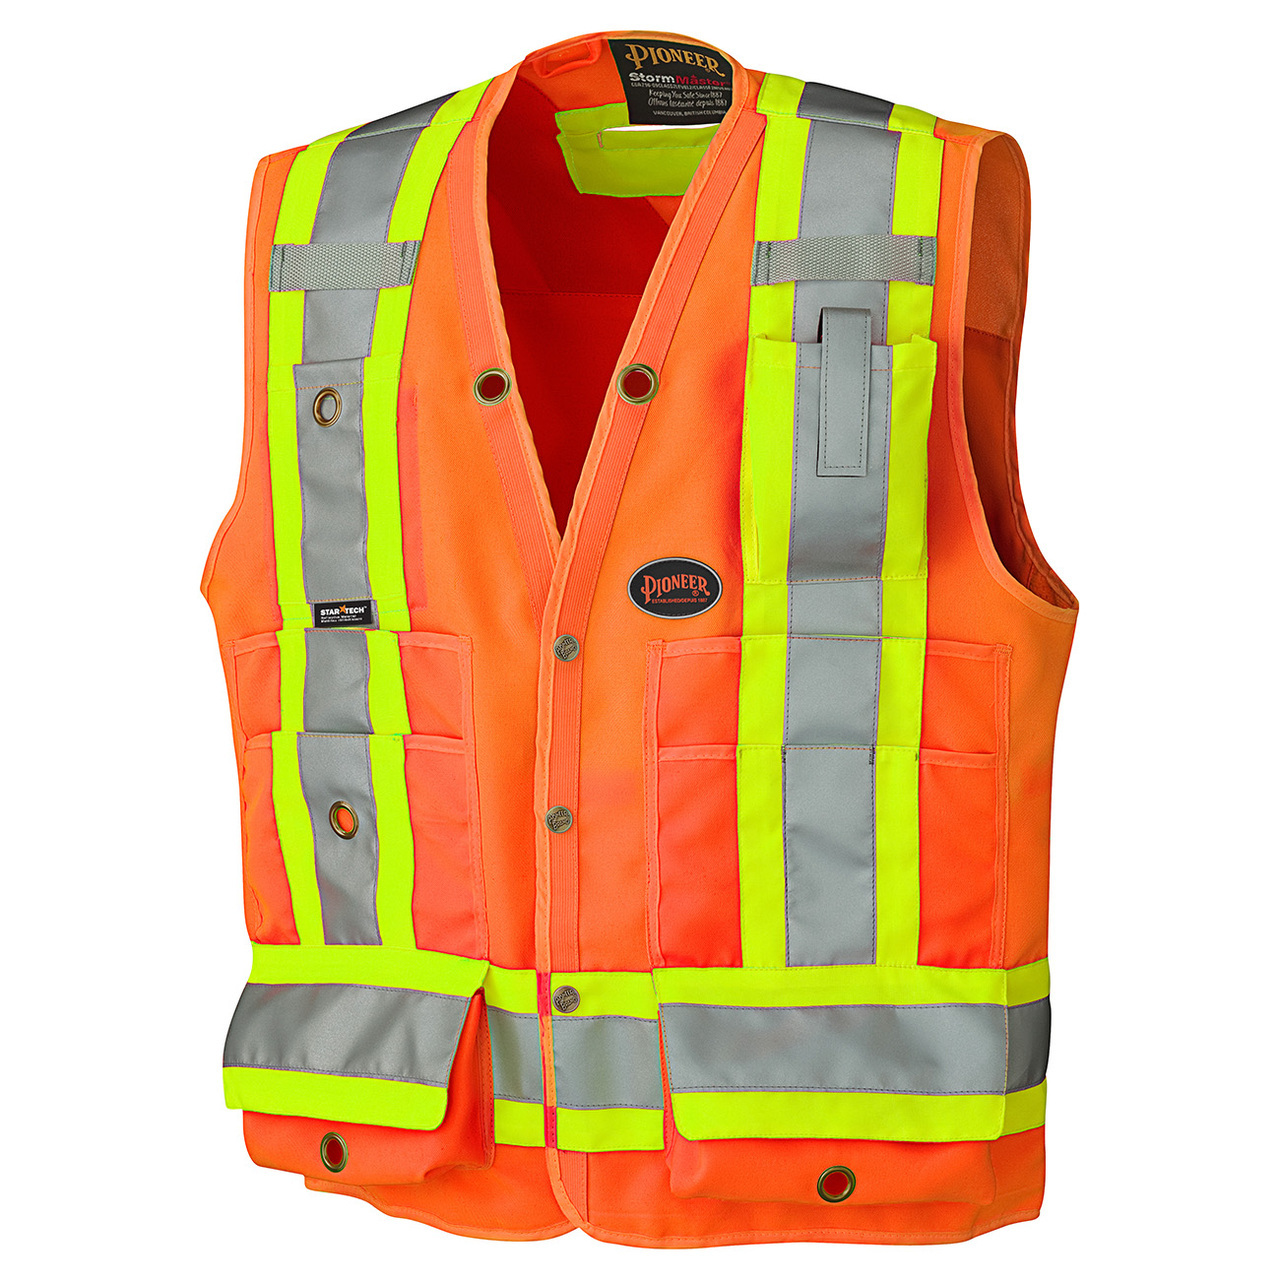 FallTech 5055 - ANSI Class 2 High-visibility Orange Safety Vest |  FallTech.com